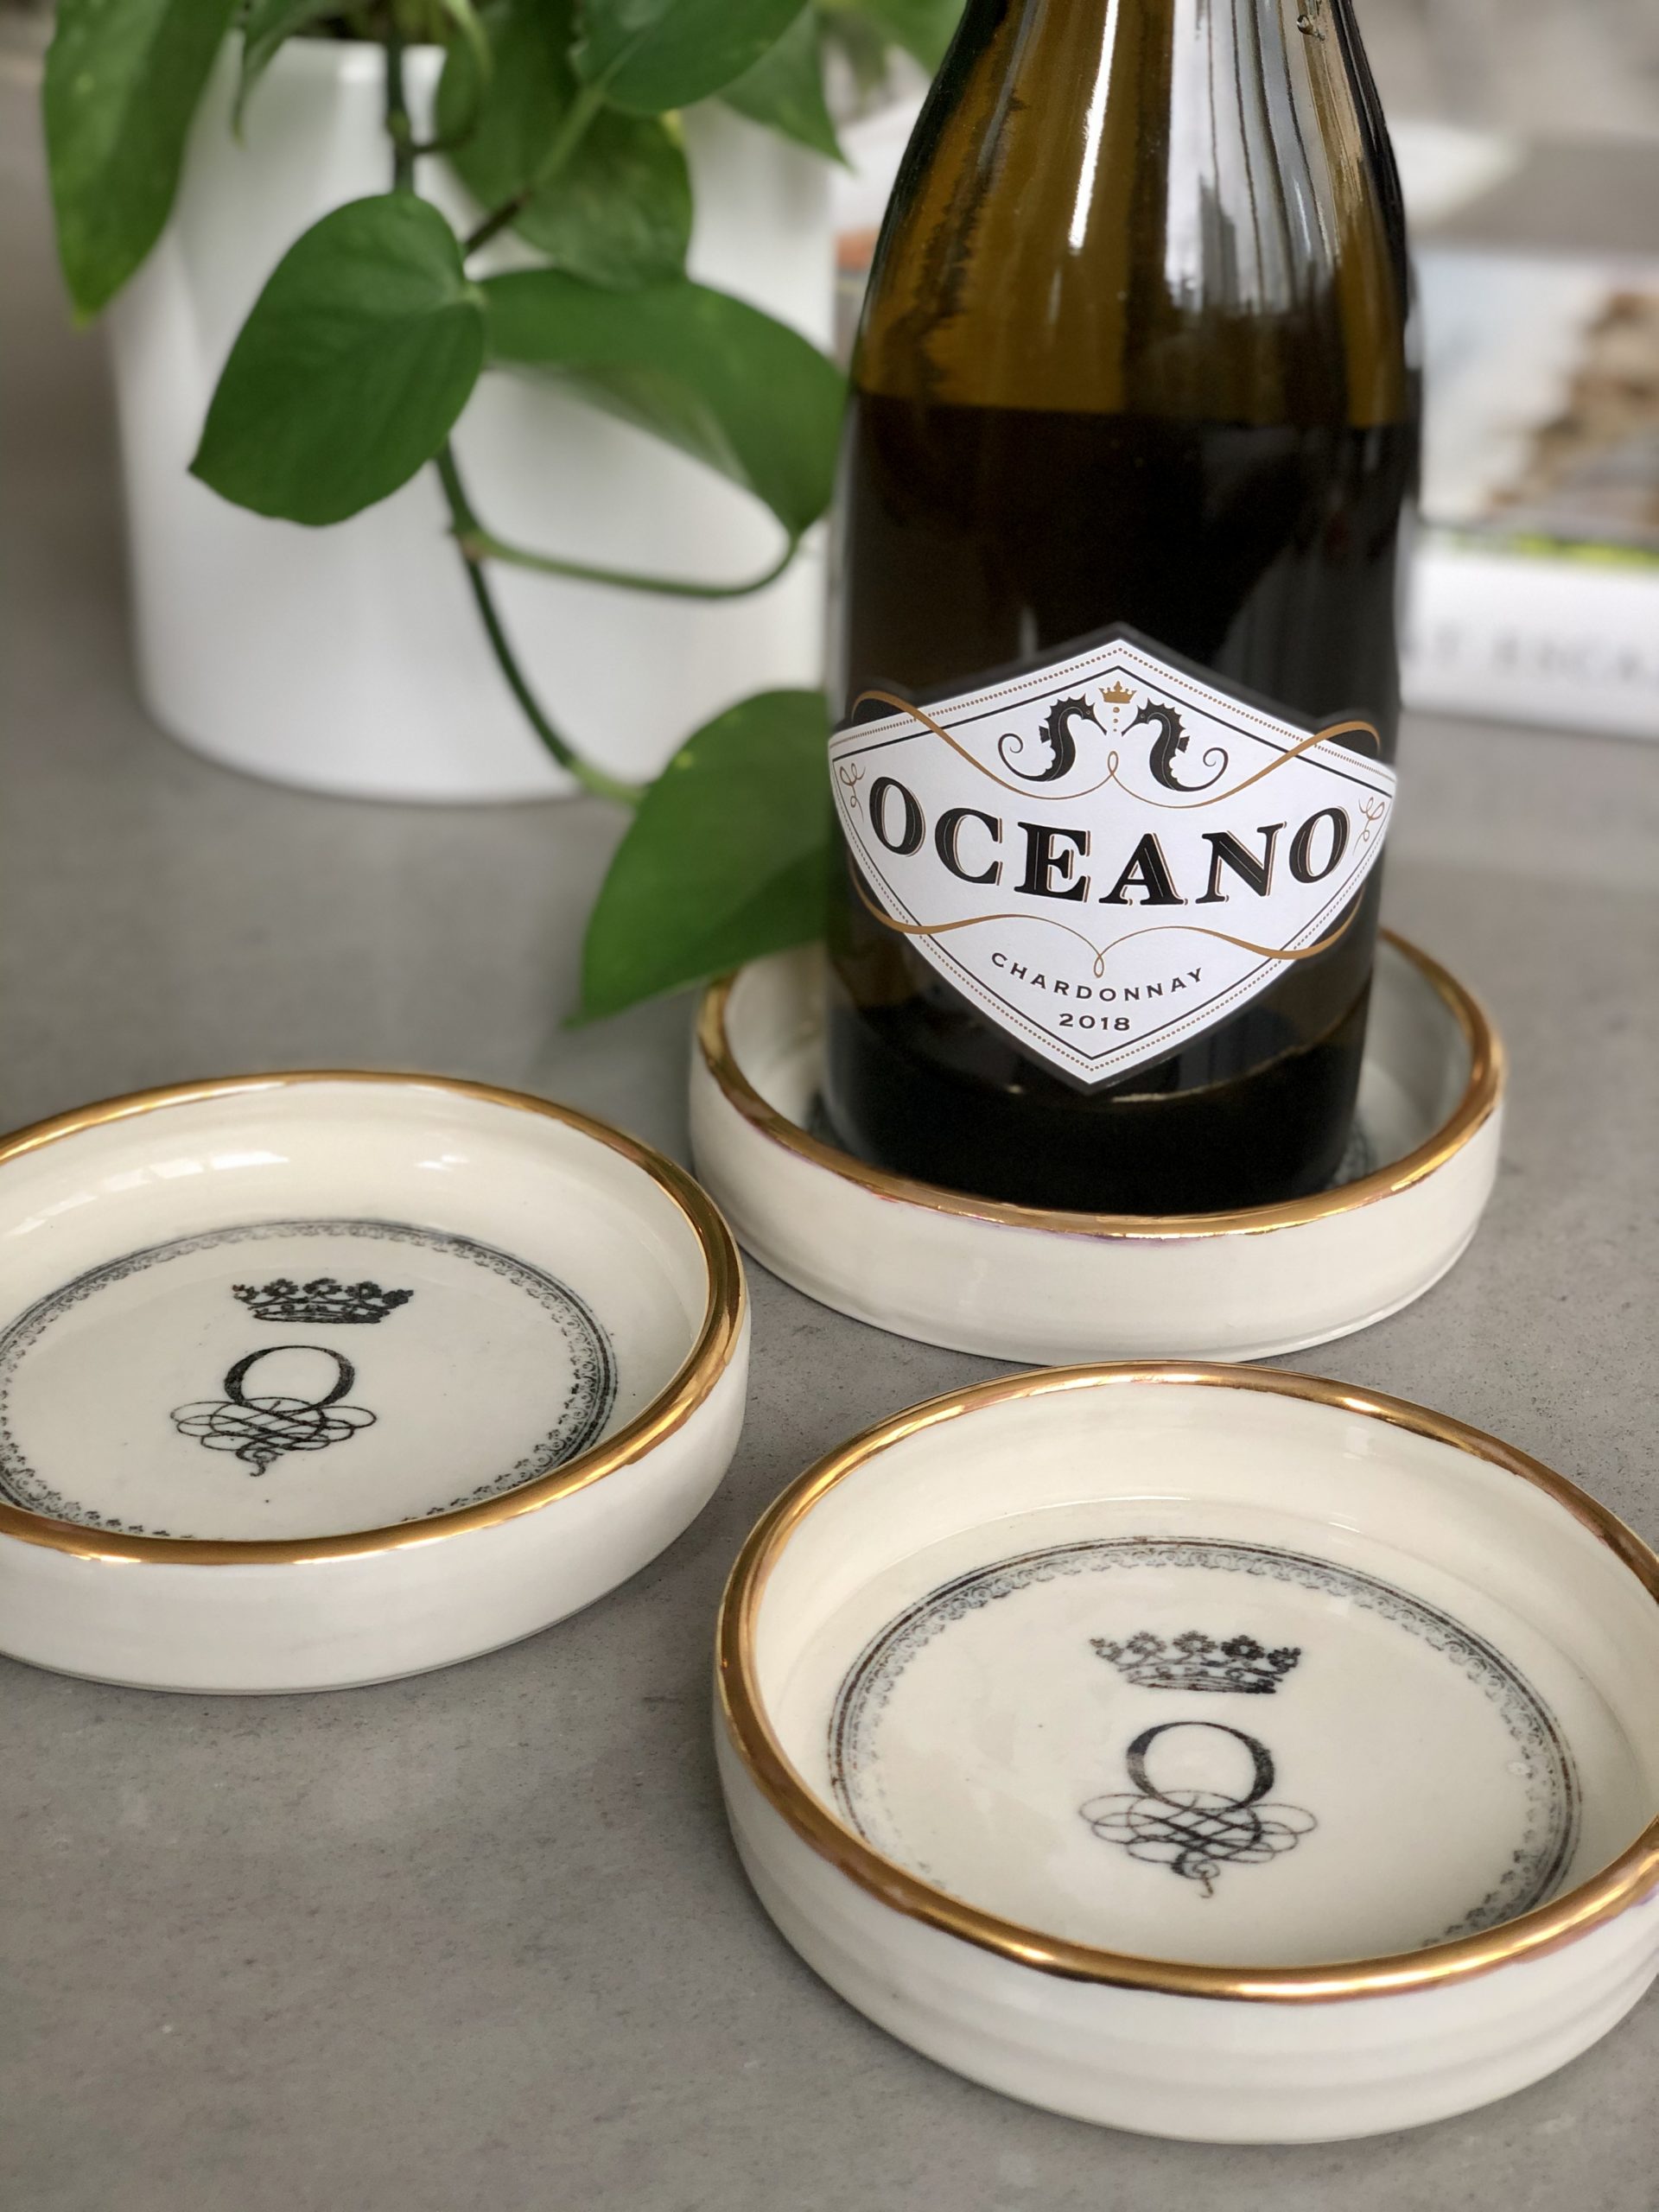 custom wine bottle coasters by Oceano Wines